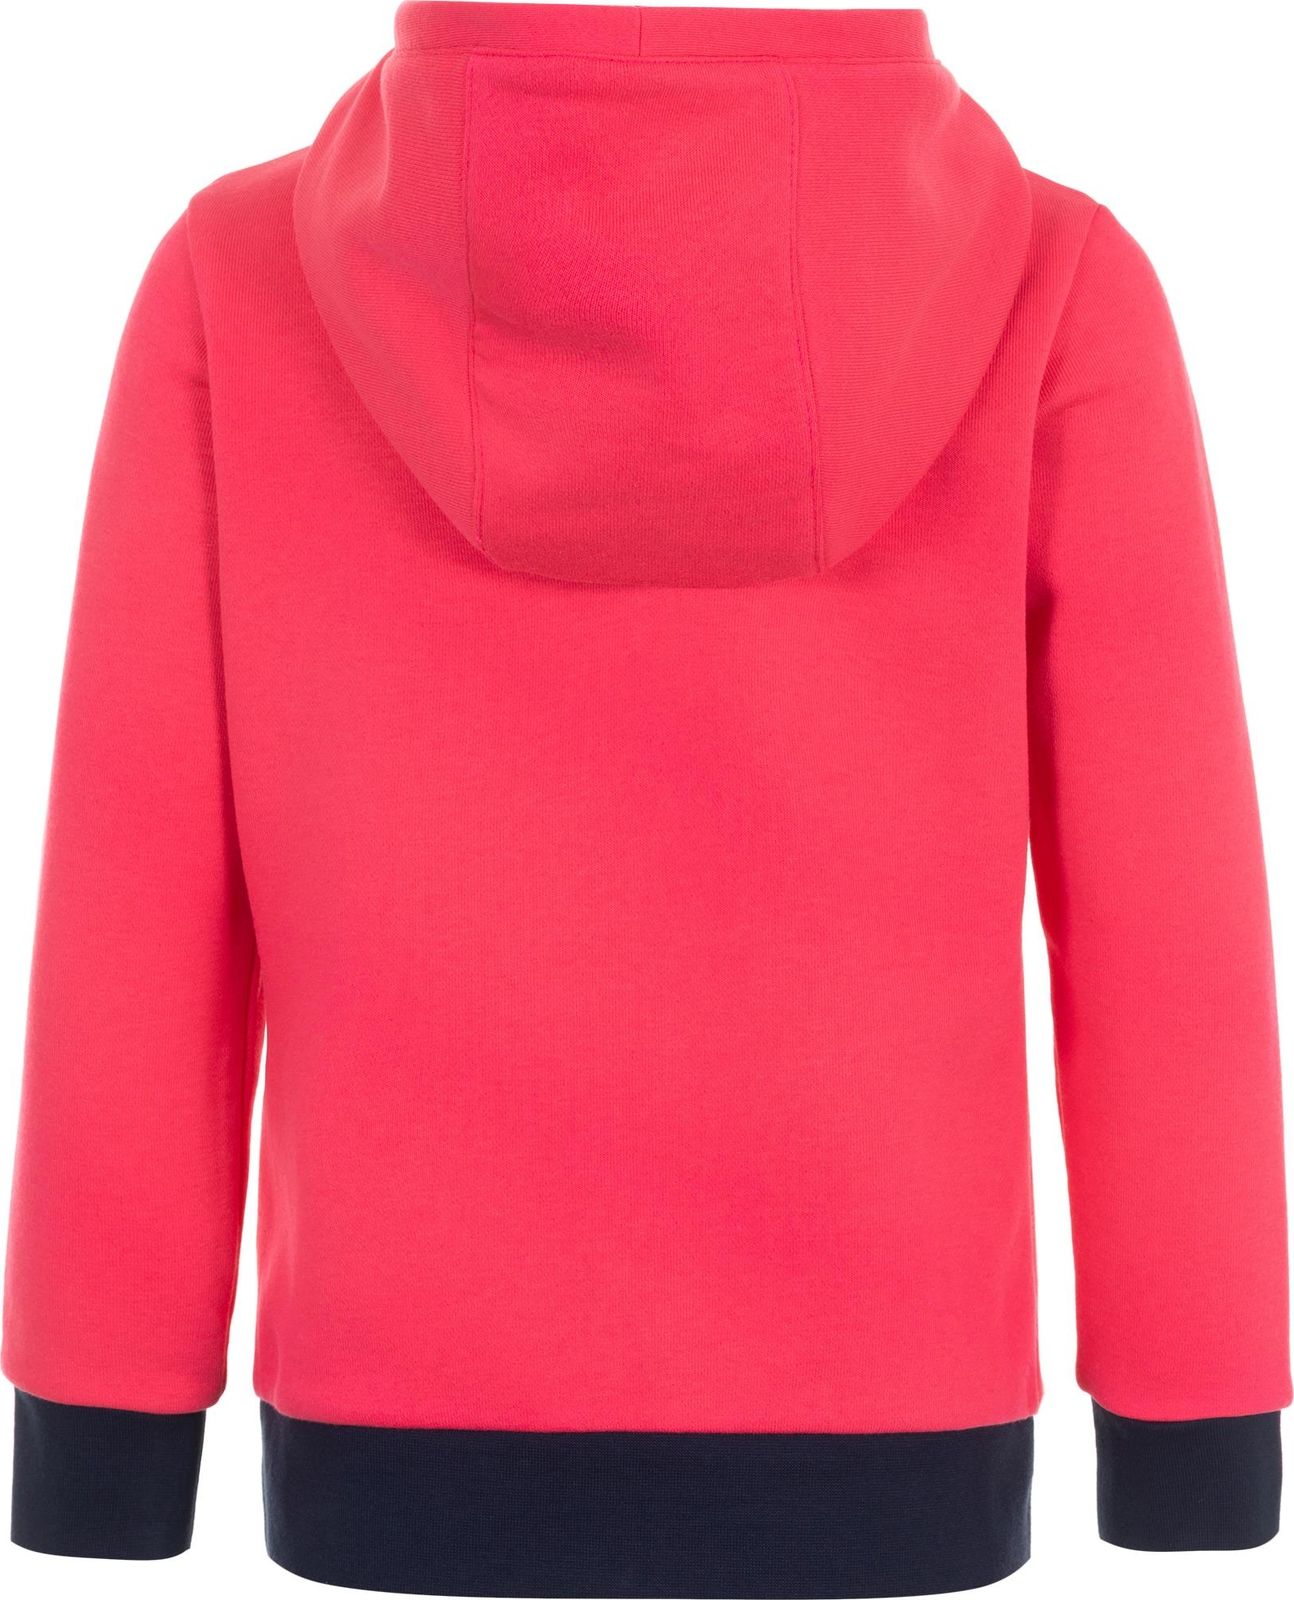    Fila Girls' Knitted Jacket, : . S19AFLJUK01-R0.  104